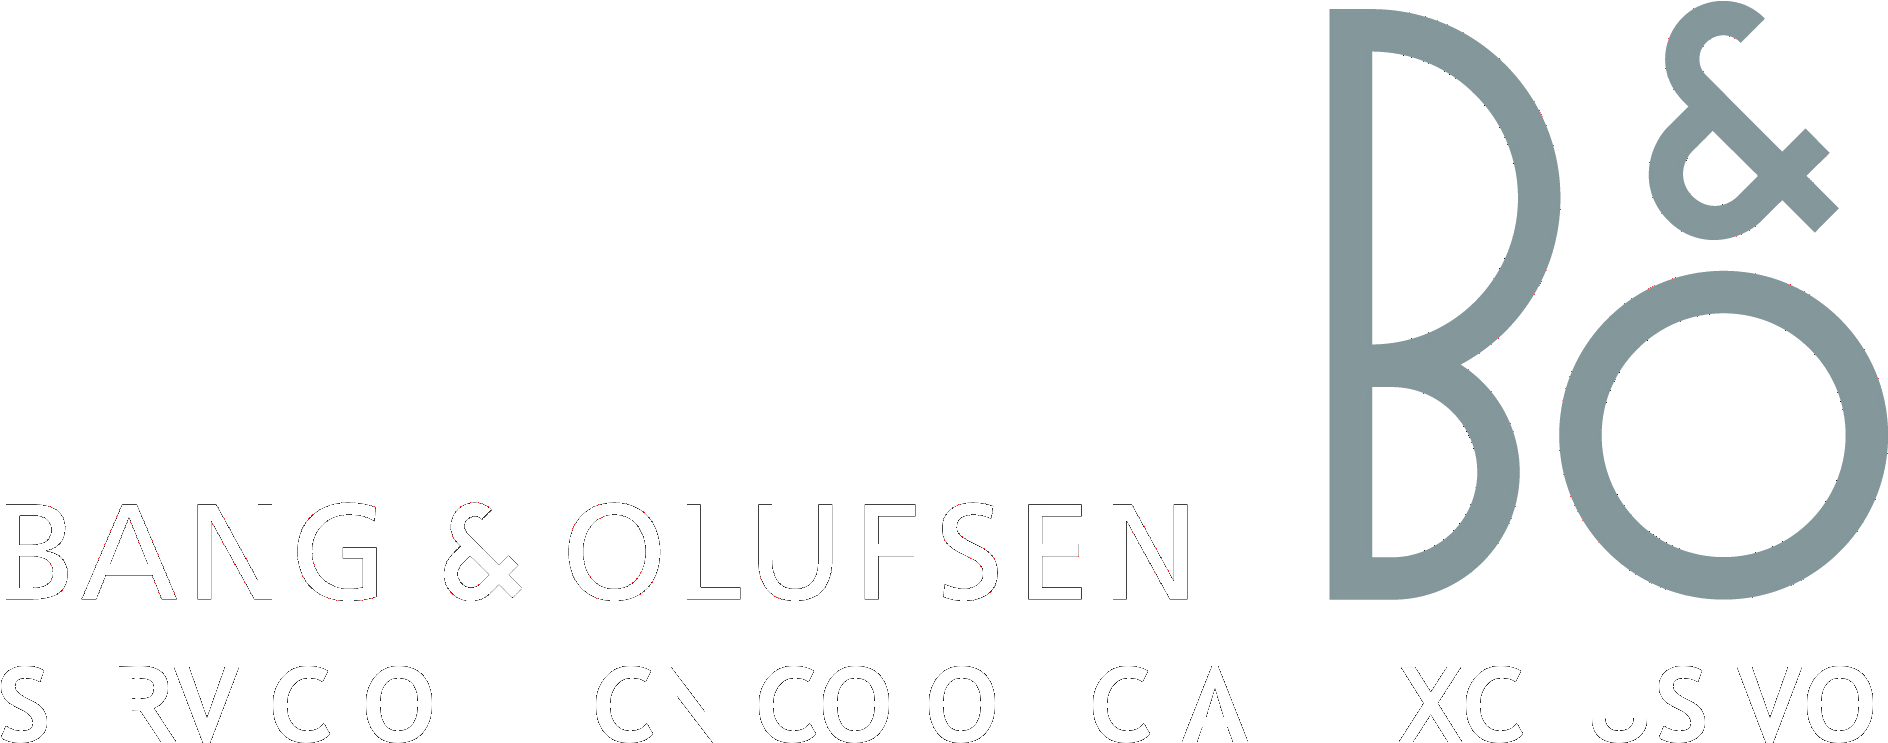 Bangolufsen Original - Bang & Olufsen Clipart (2320x1146), Png Download